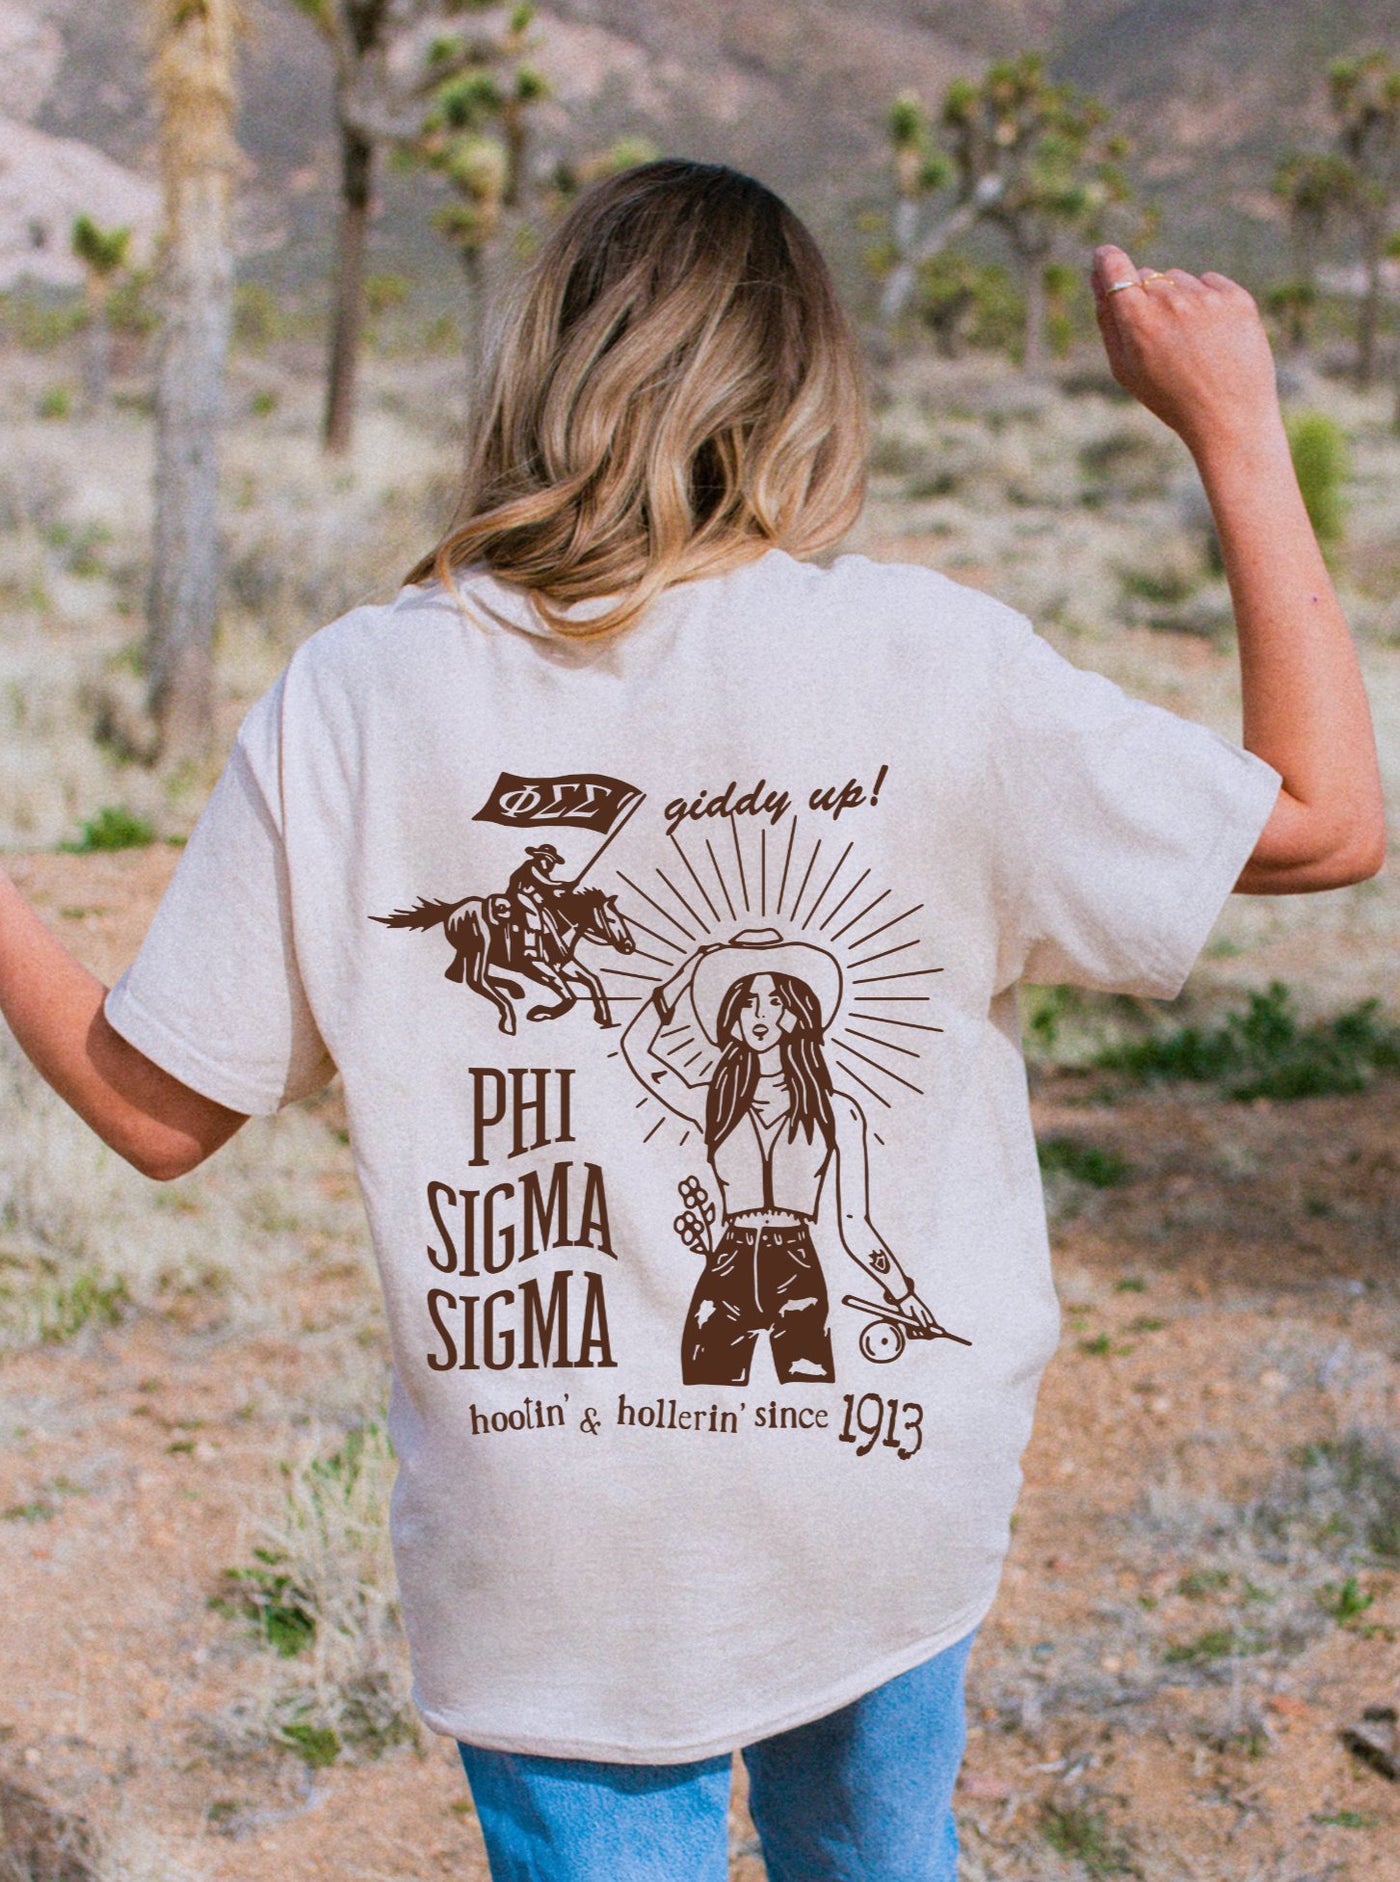 Phi Sigma Sigma Country Western Sorority T-shirt